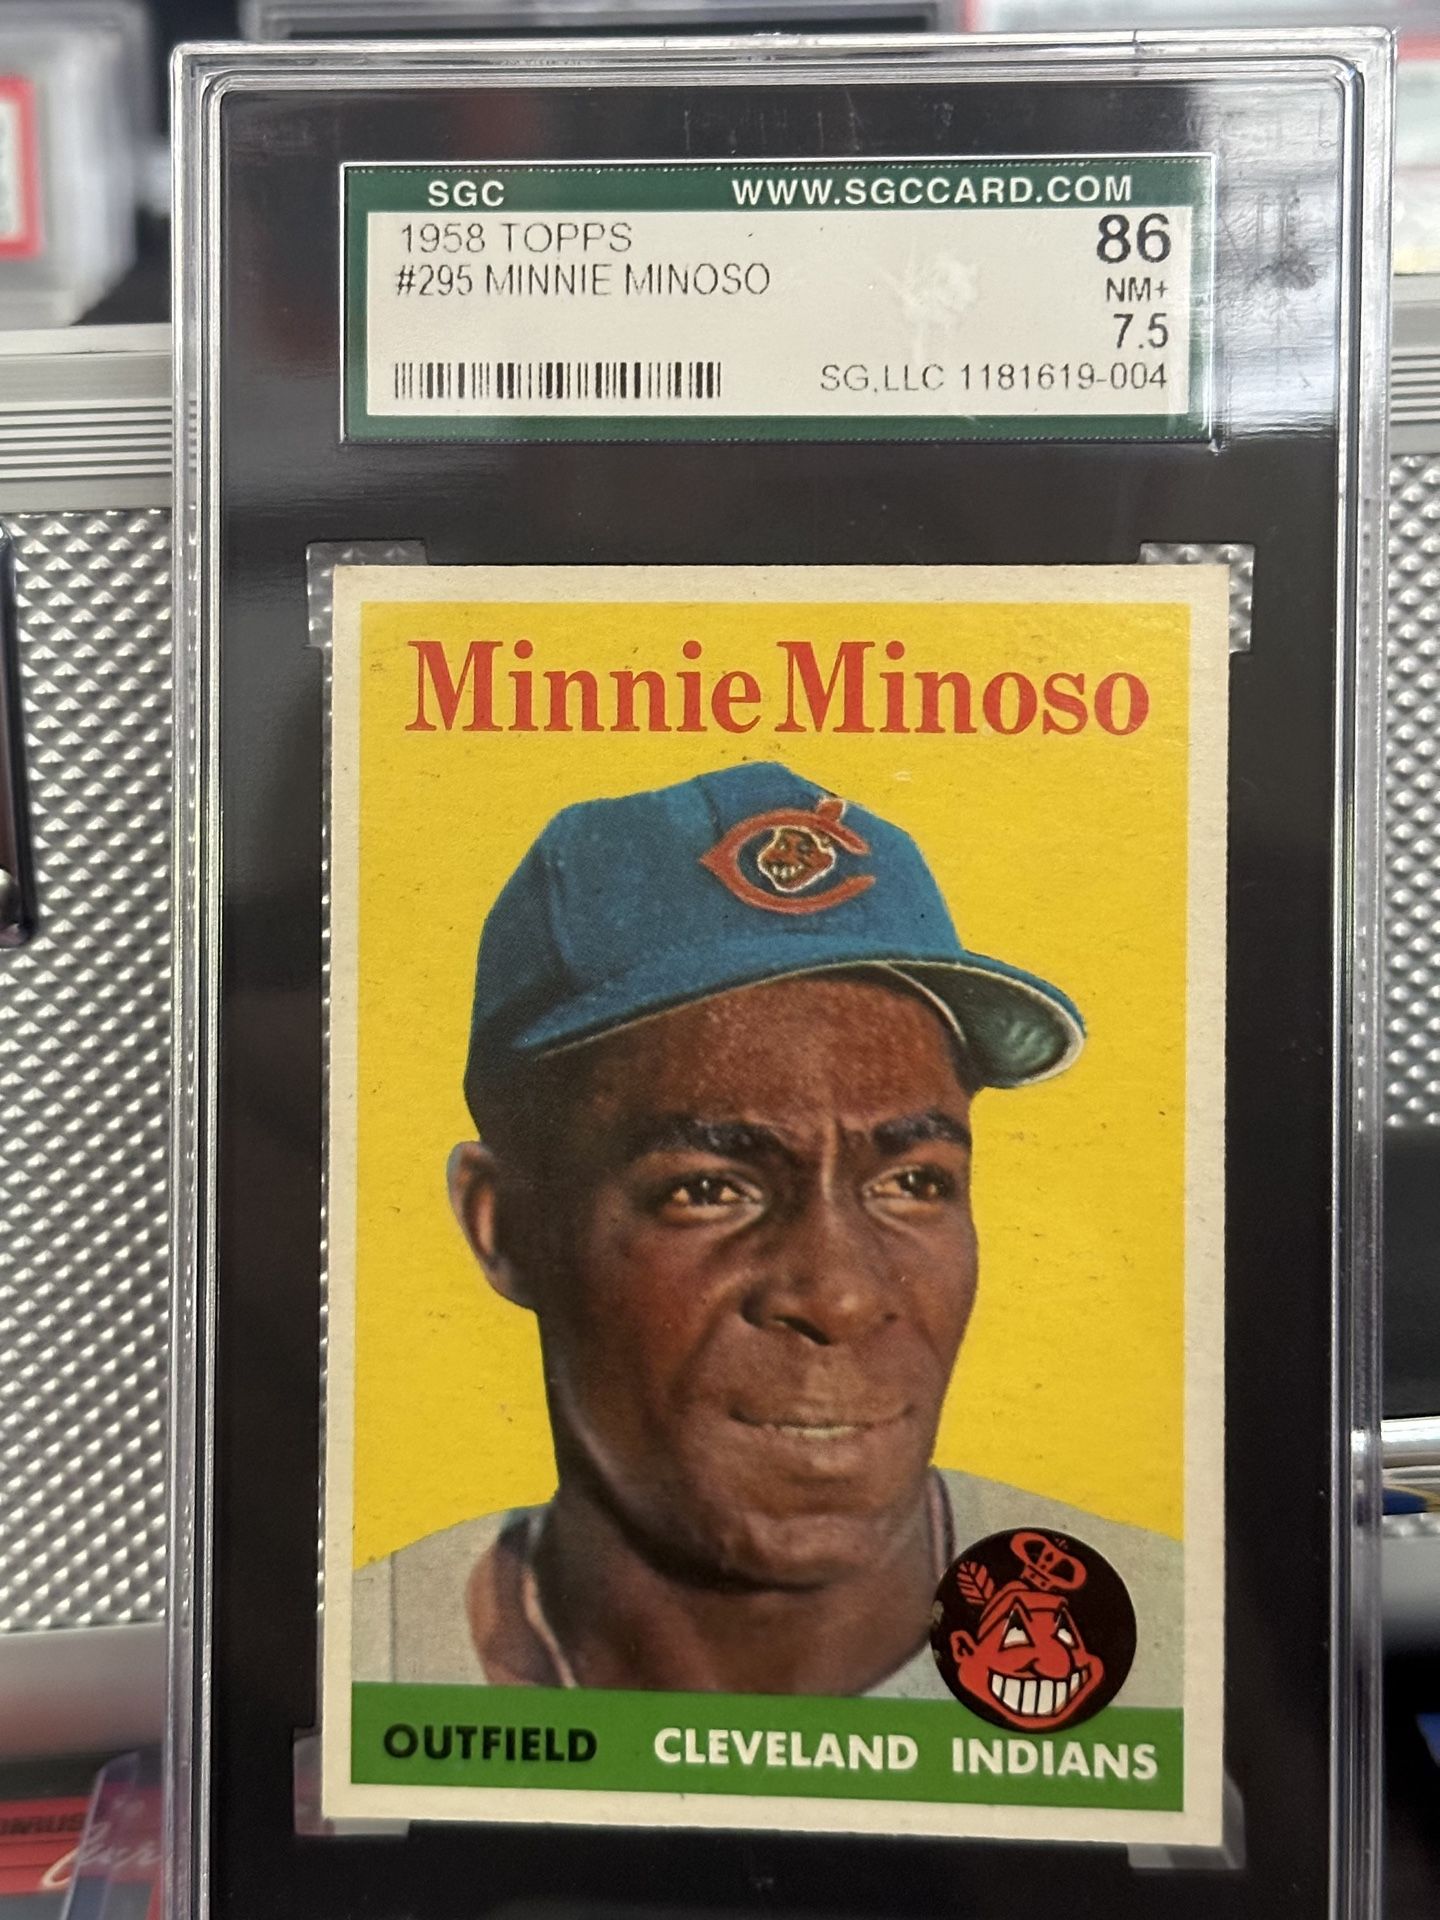 Topps 1958 NM 7.5 SGC Minnie Minosa